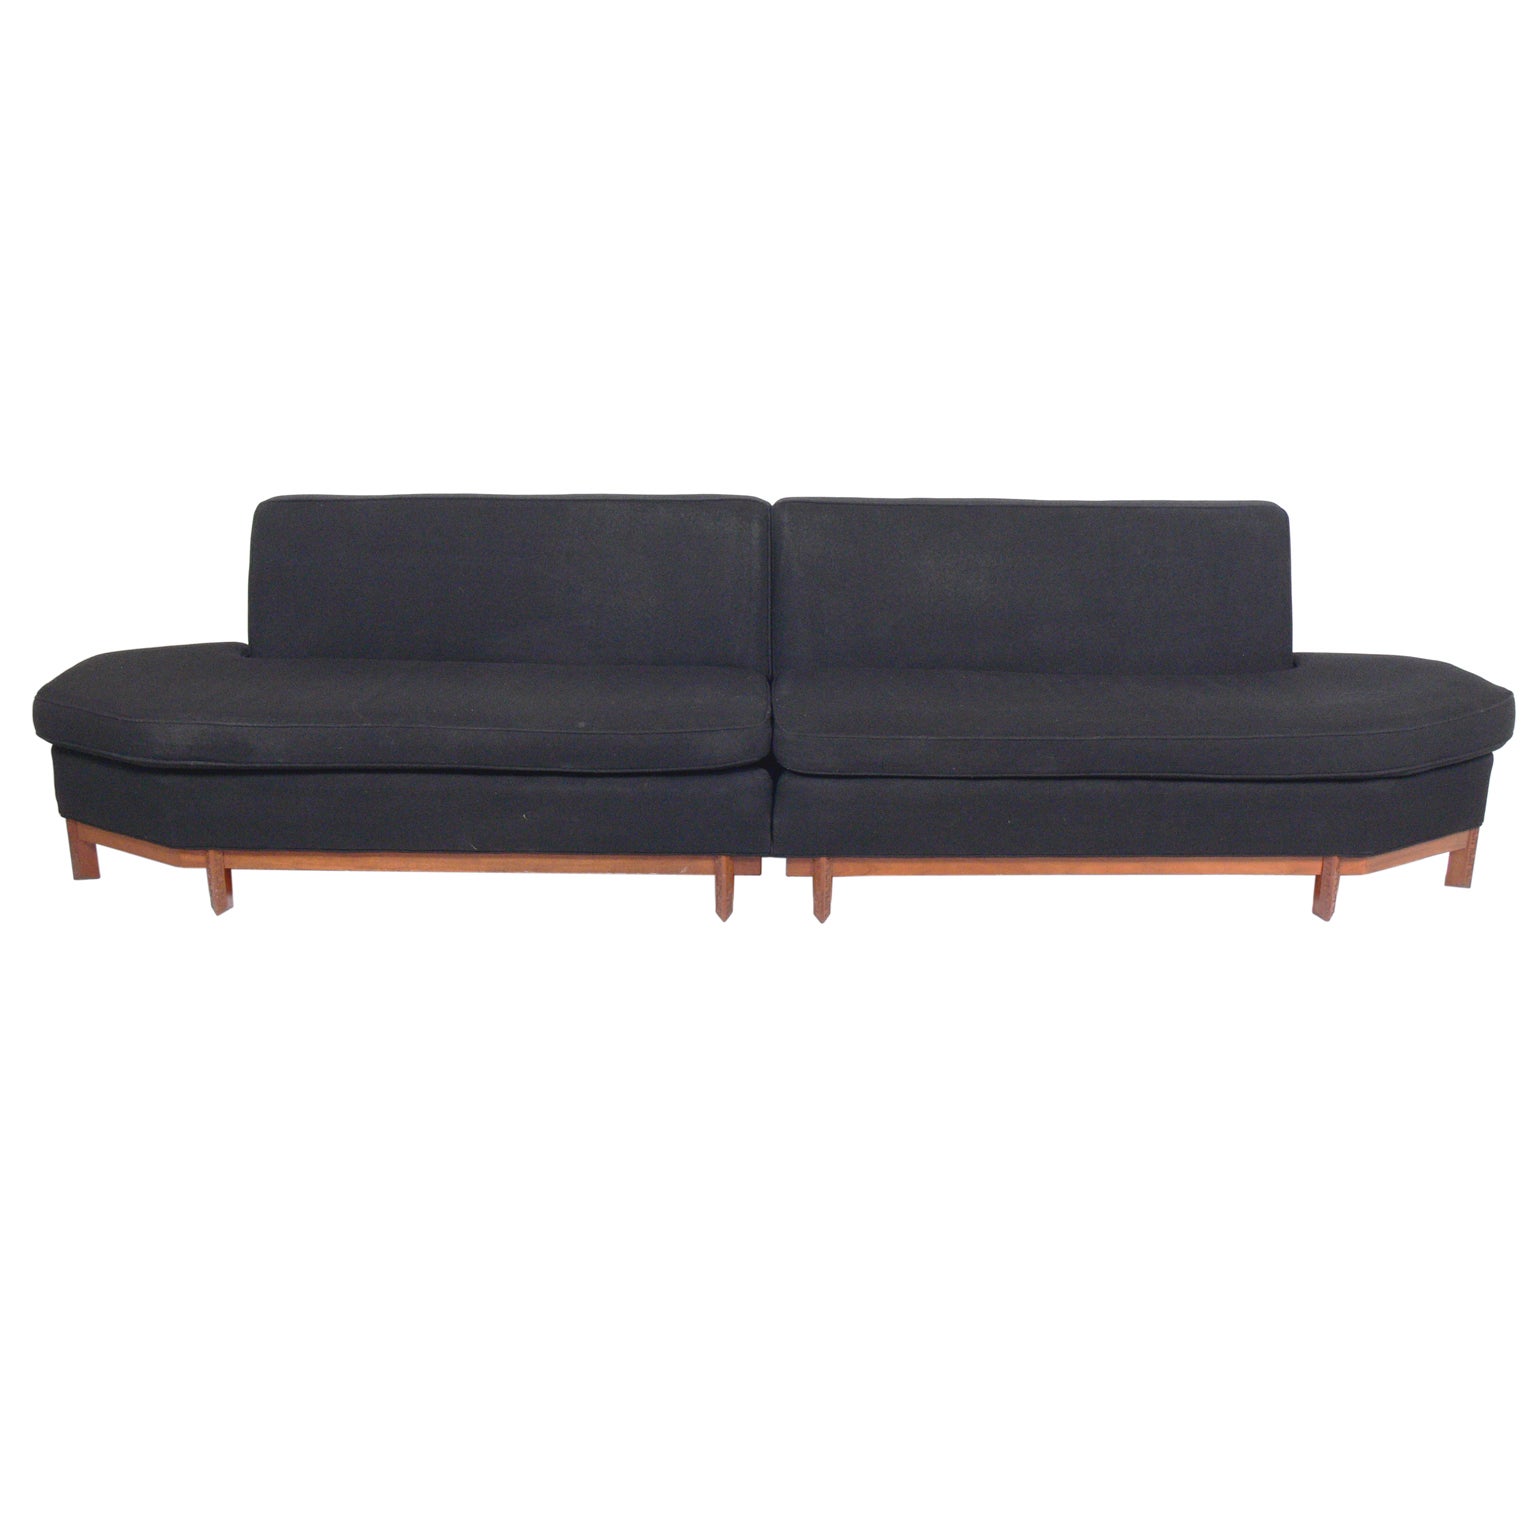 Modernist Two Part Sofa by Frank Lloyd Wright